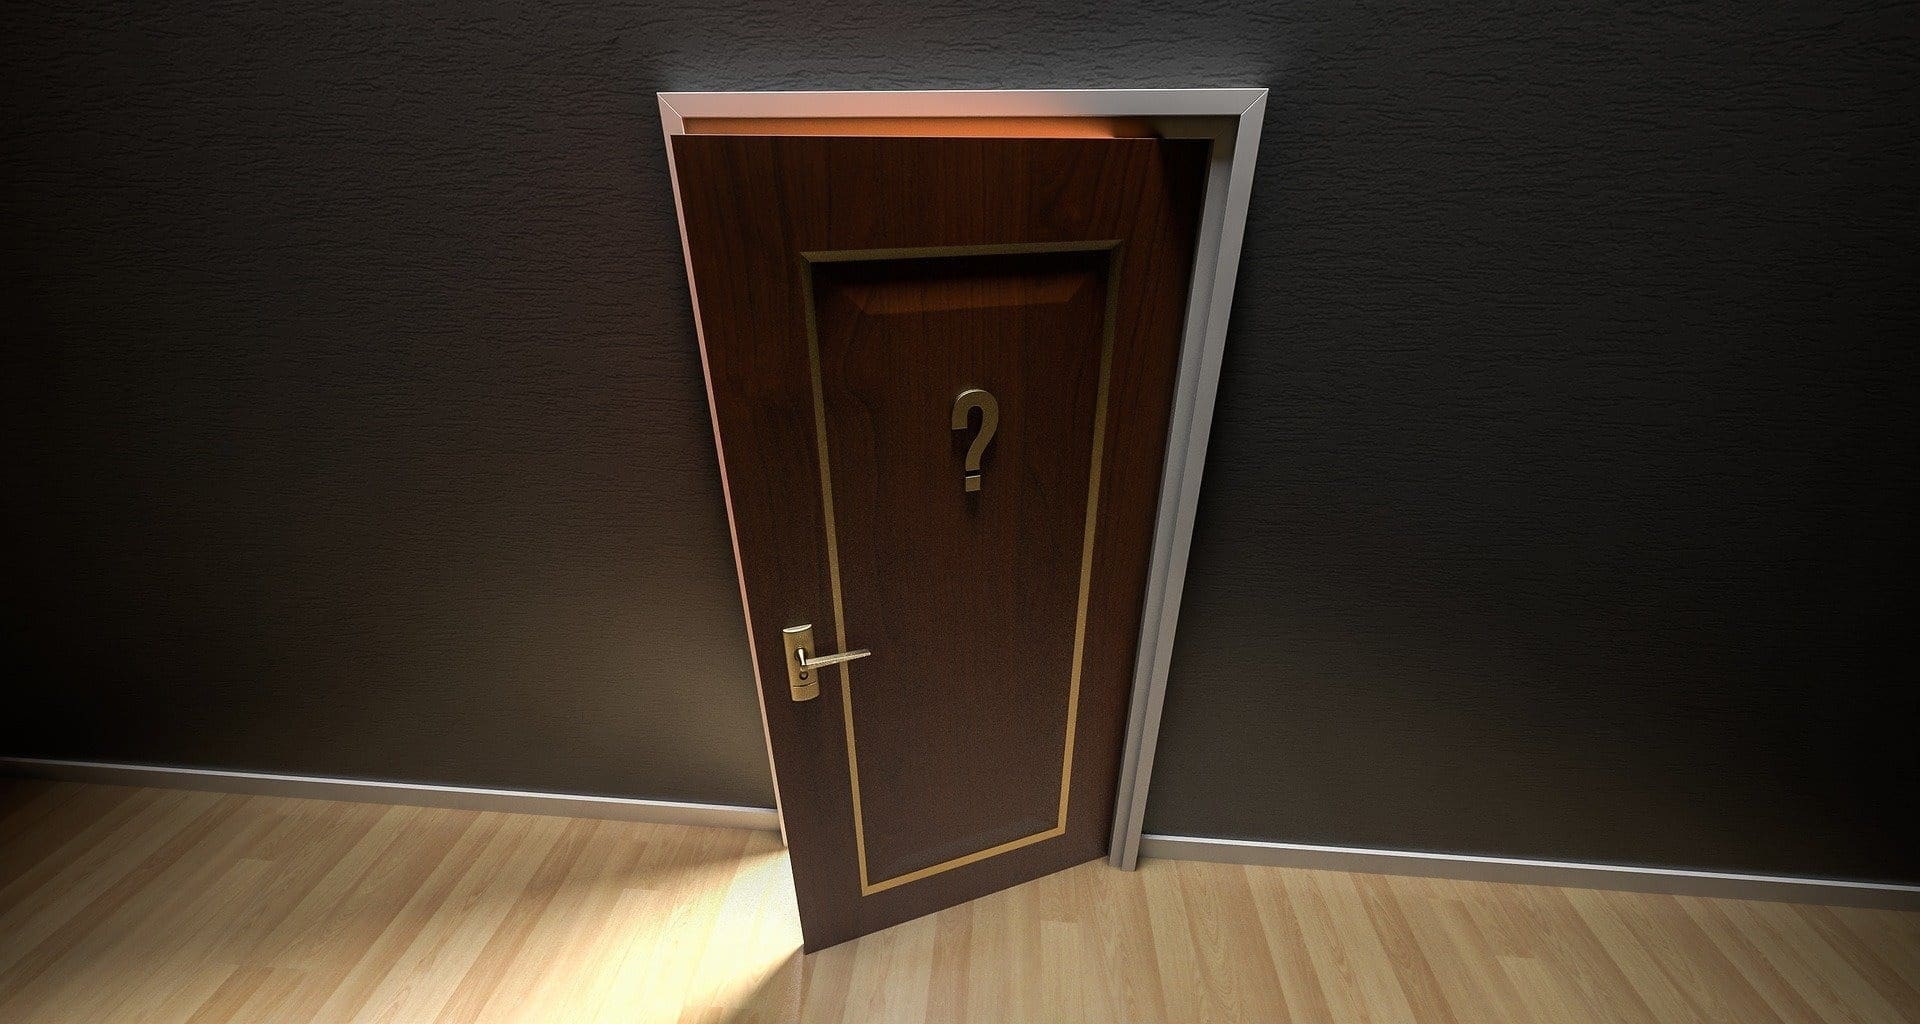 wrong career fiberglass door entry system